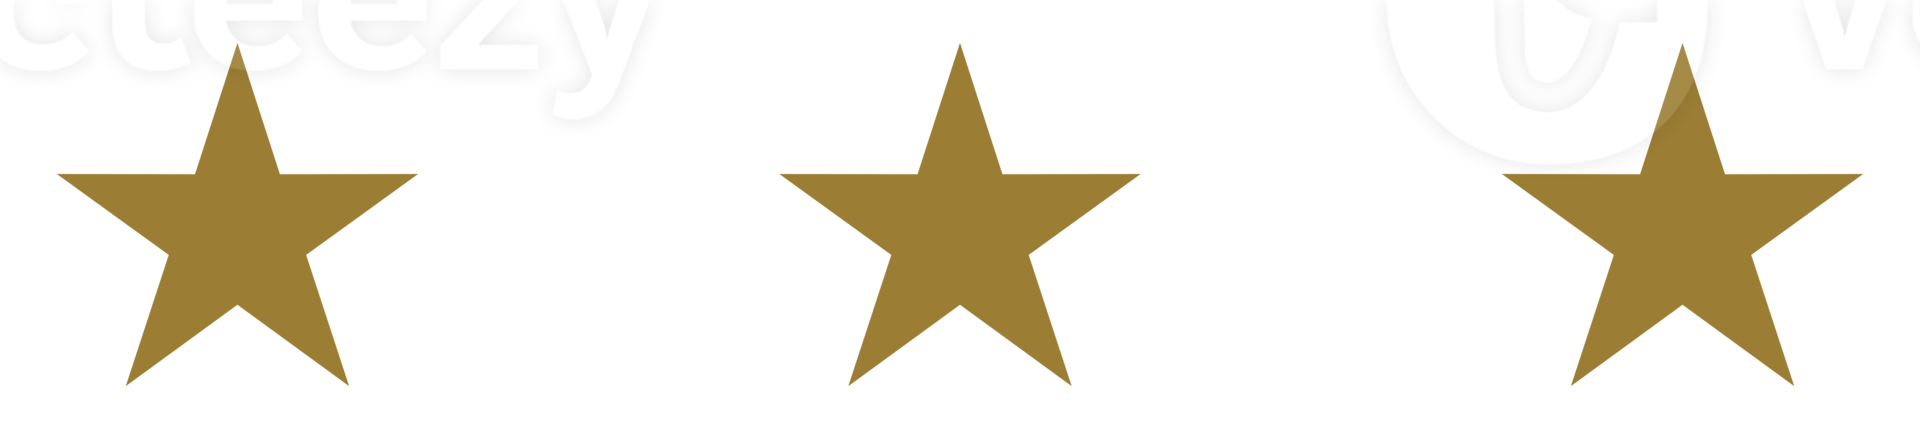 Five Star Sign, 5 Star Rating Icon Symbol for Pictogram, Apps, Website or Graphic Design Element. Format PNG